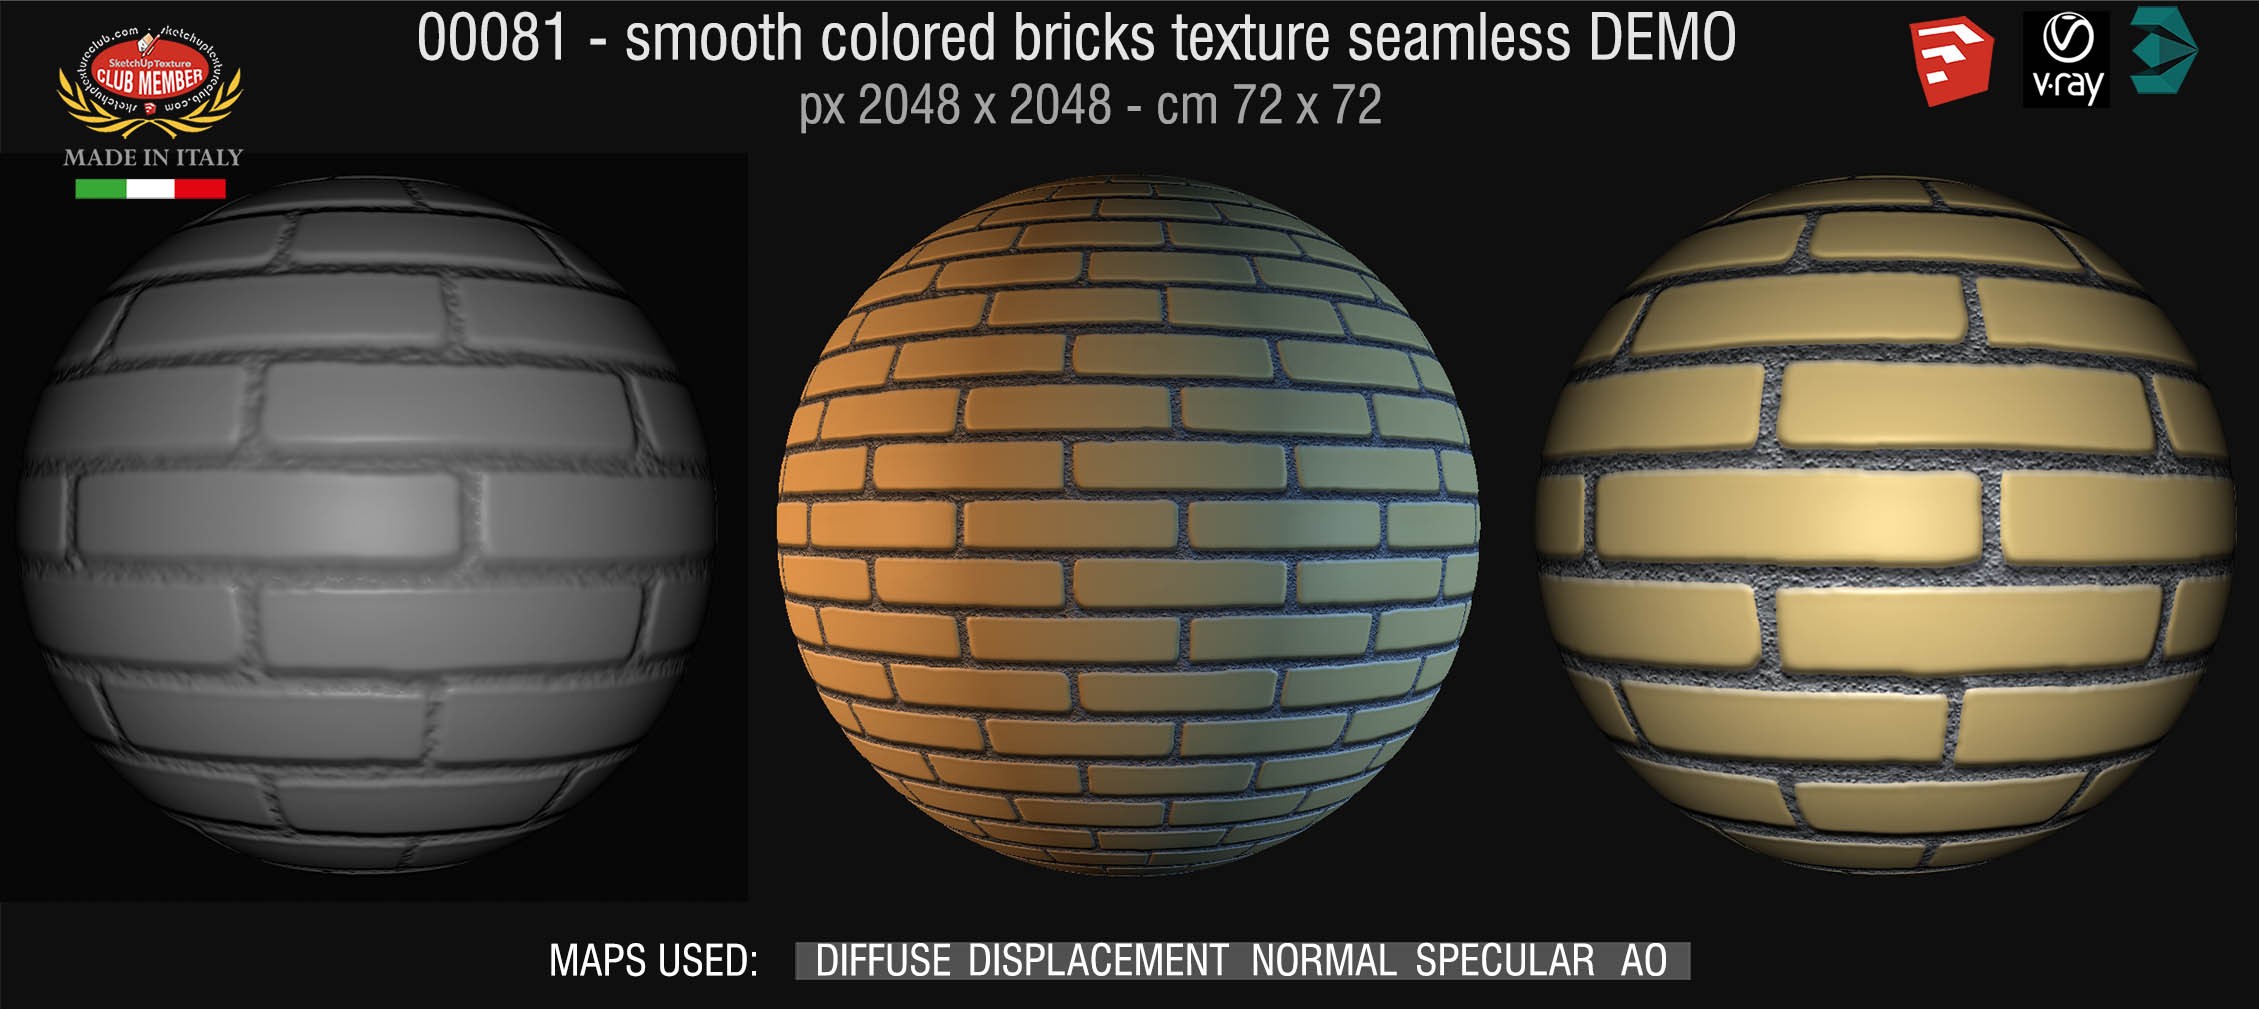 00081 smooth colored bricks texture seamless + maps DEMO